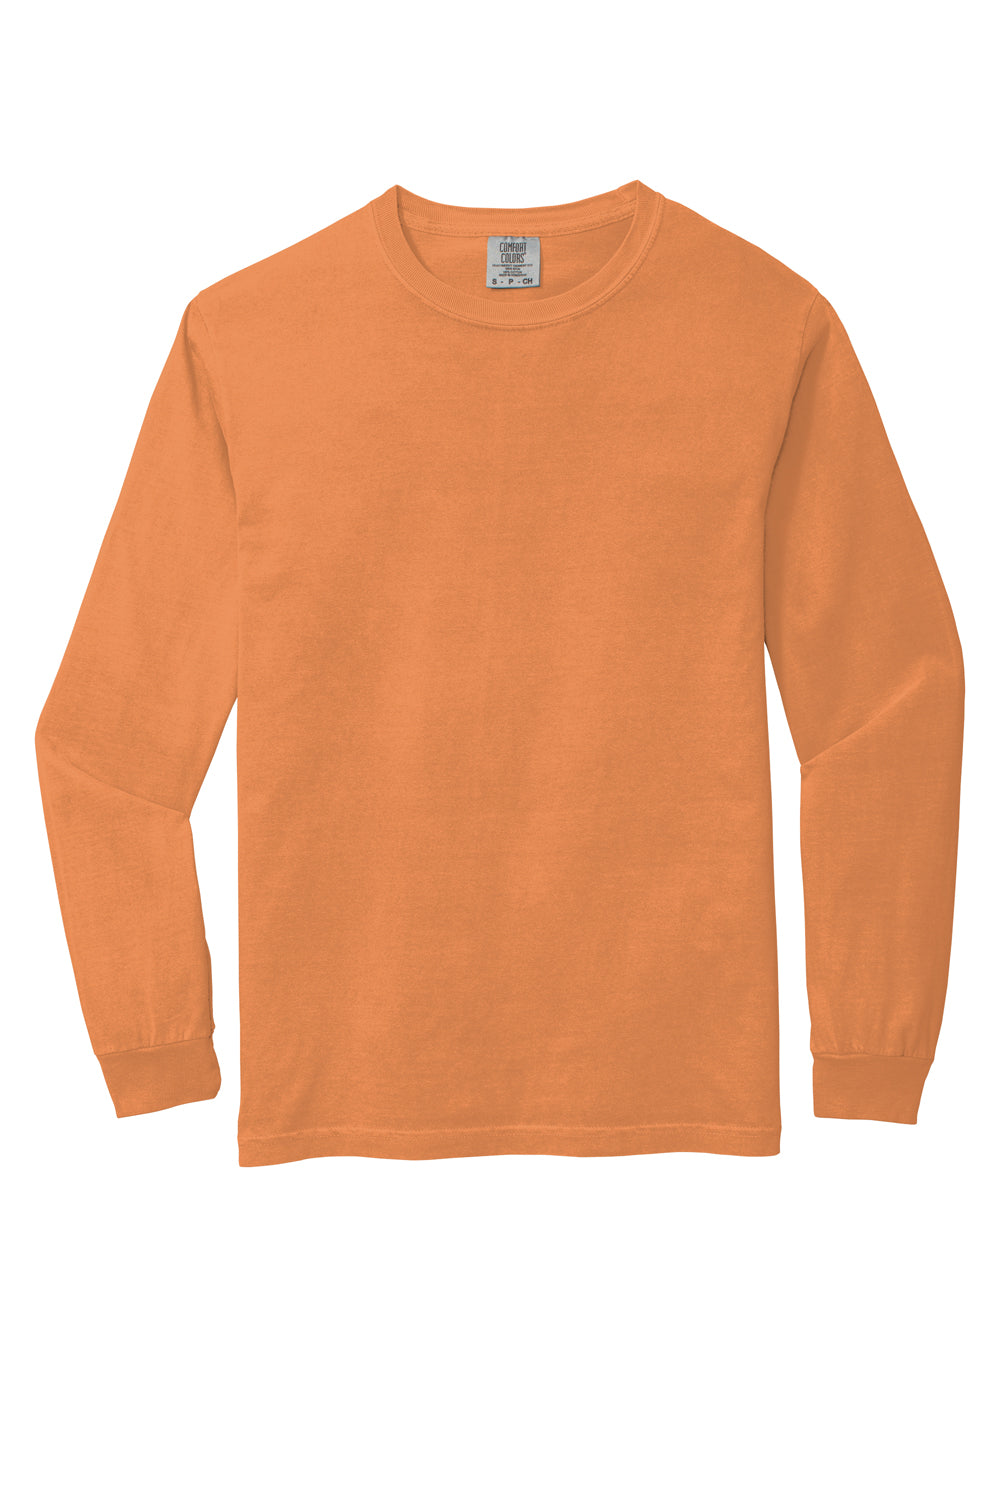 Comfort Colors Mens Long Sleeve Crewneck T-Shirt Burnt Orange Flat Front